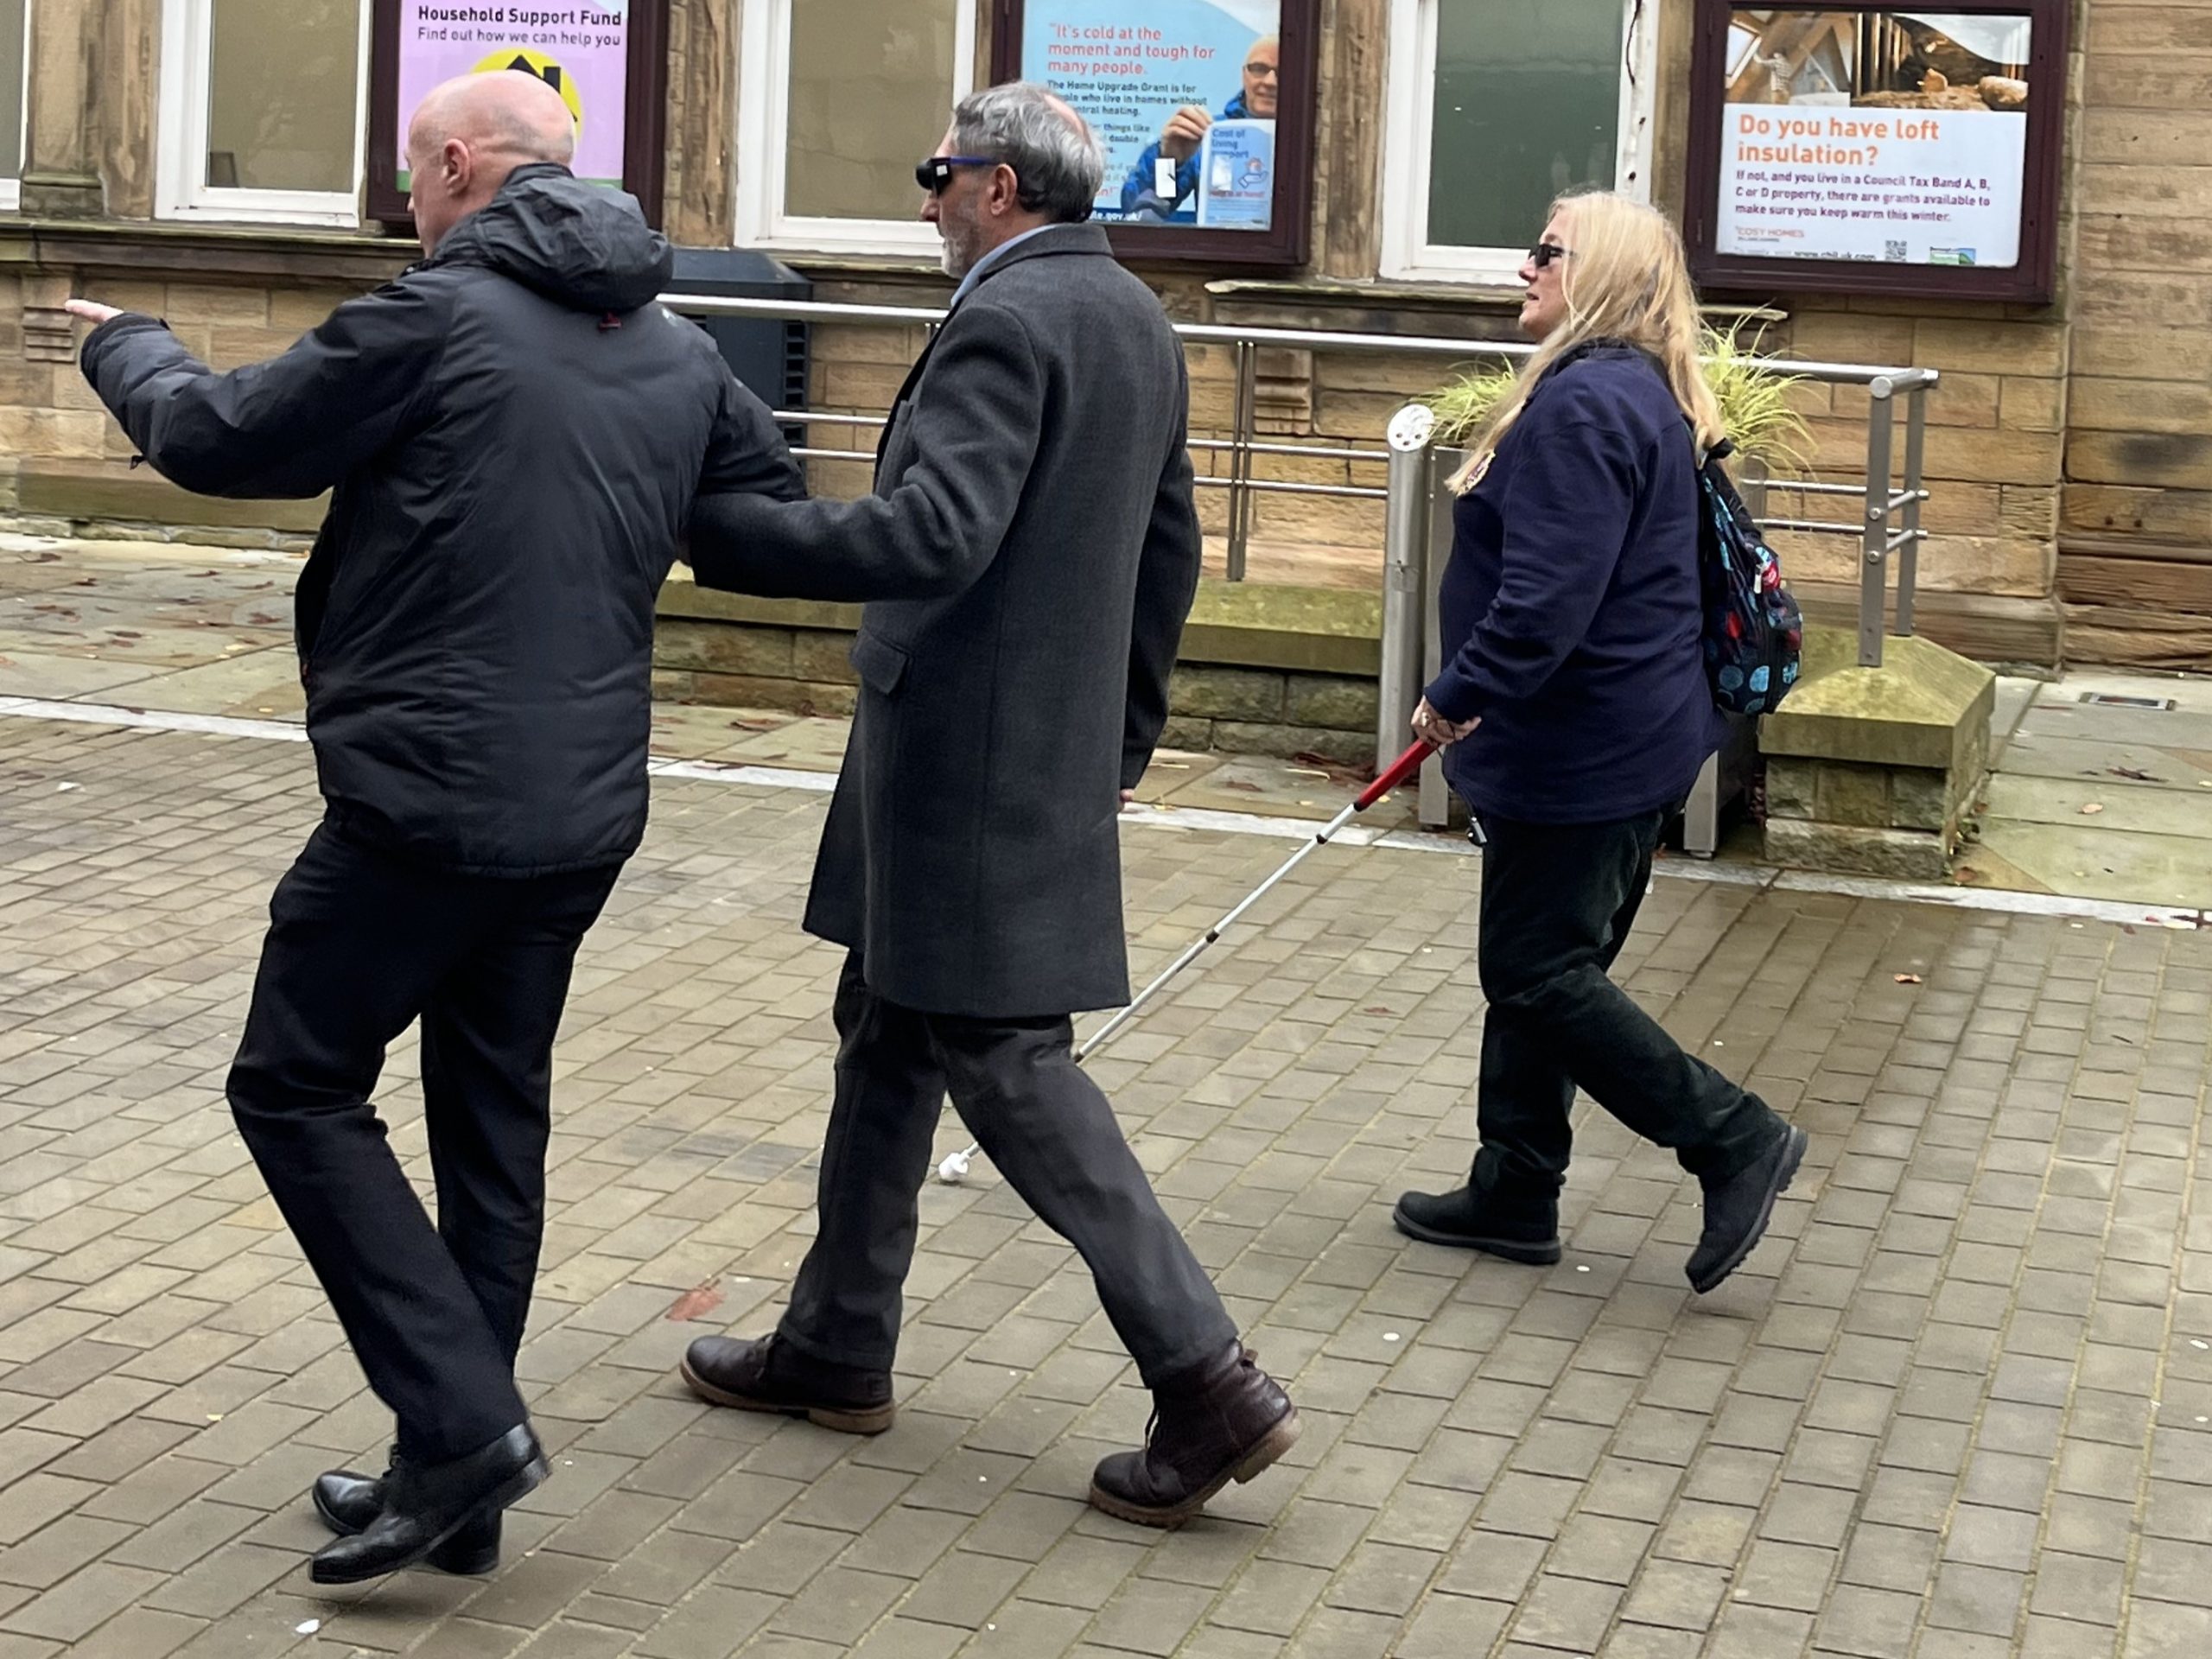 Lancashire SLC member Dawn, walking alongside two councillors during the sim spec walk in Pendle.